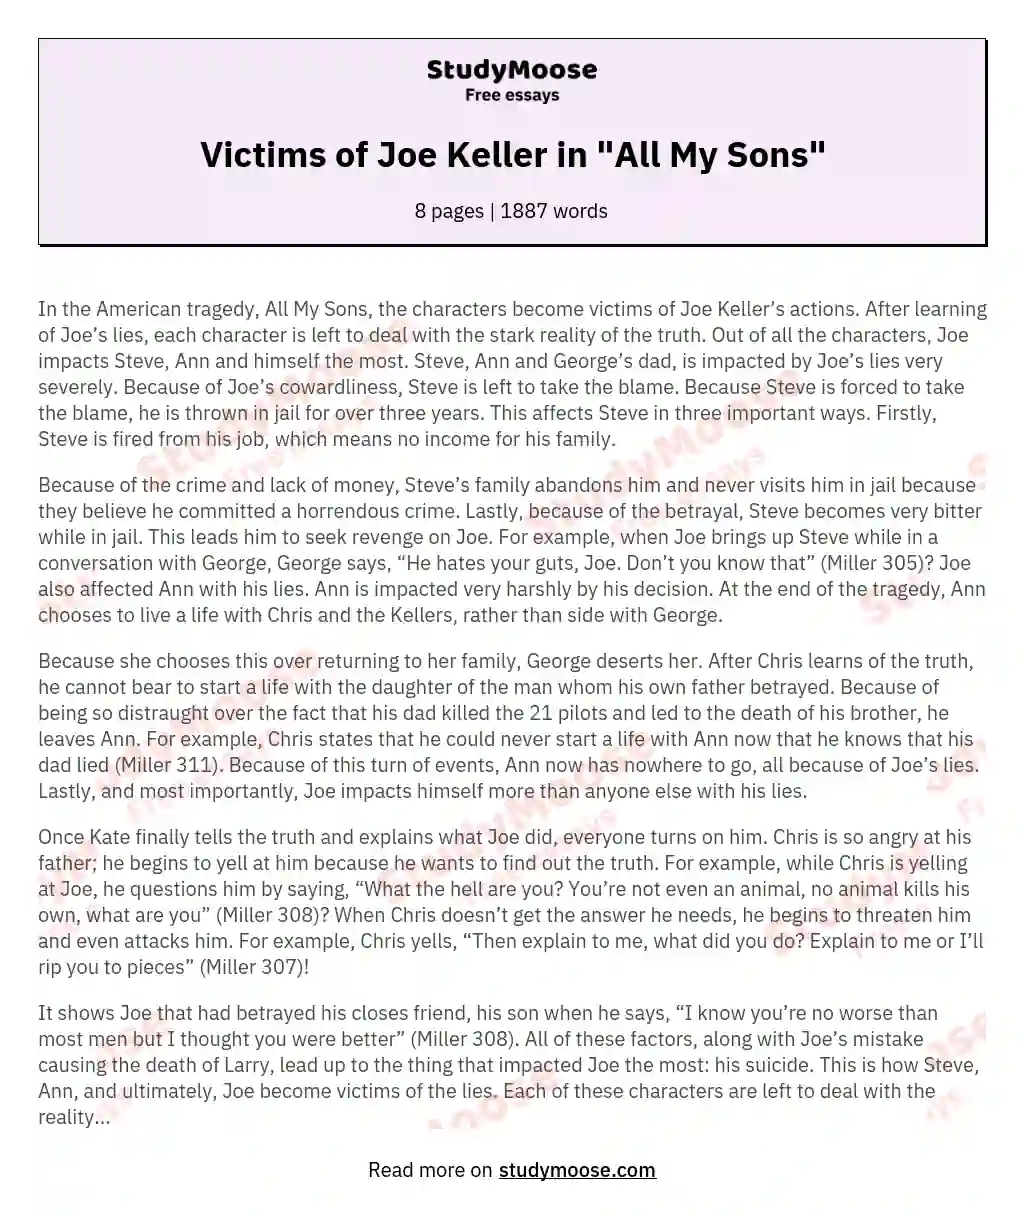 Victims of Joe Keller in "All My Sons"